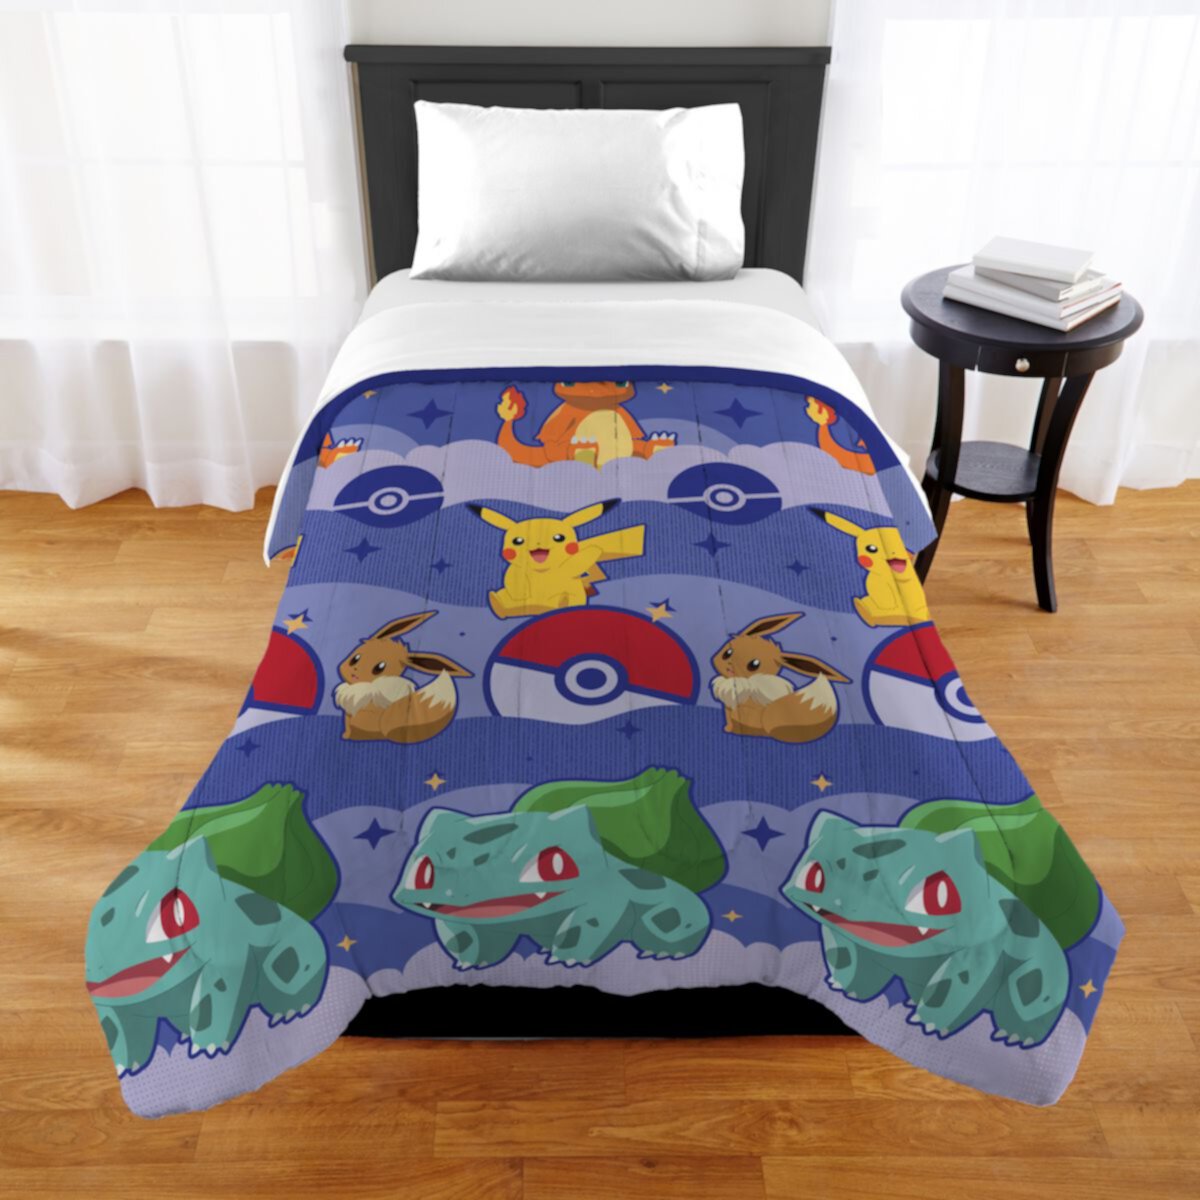 Pokémon Dreams Comforter Licensed Character